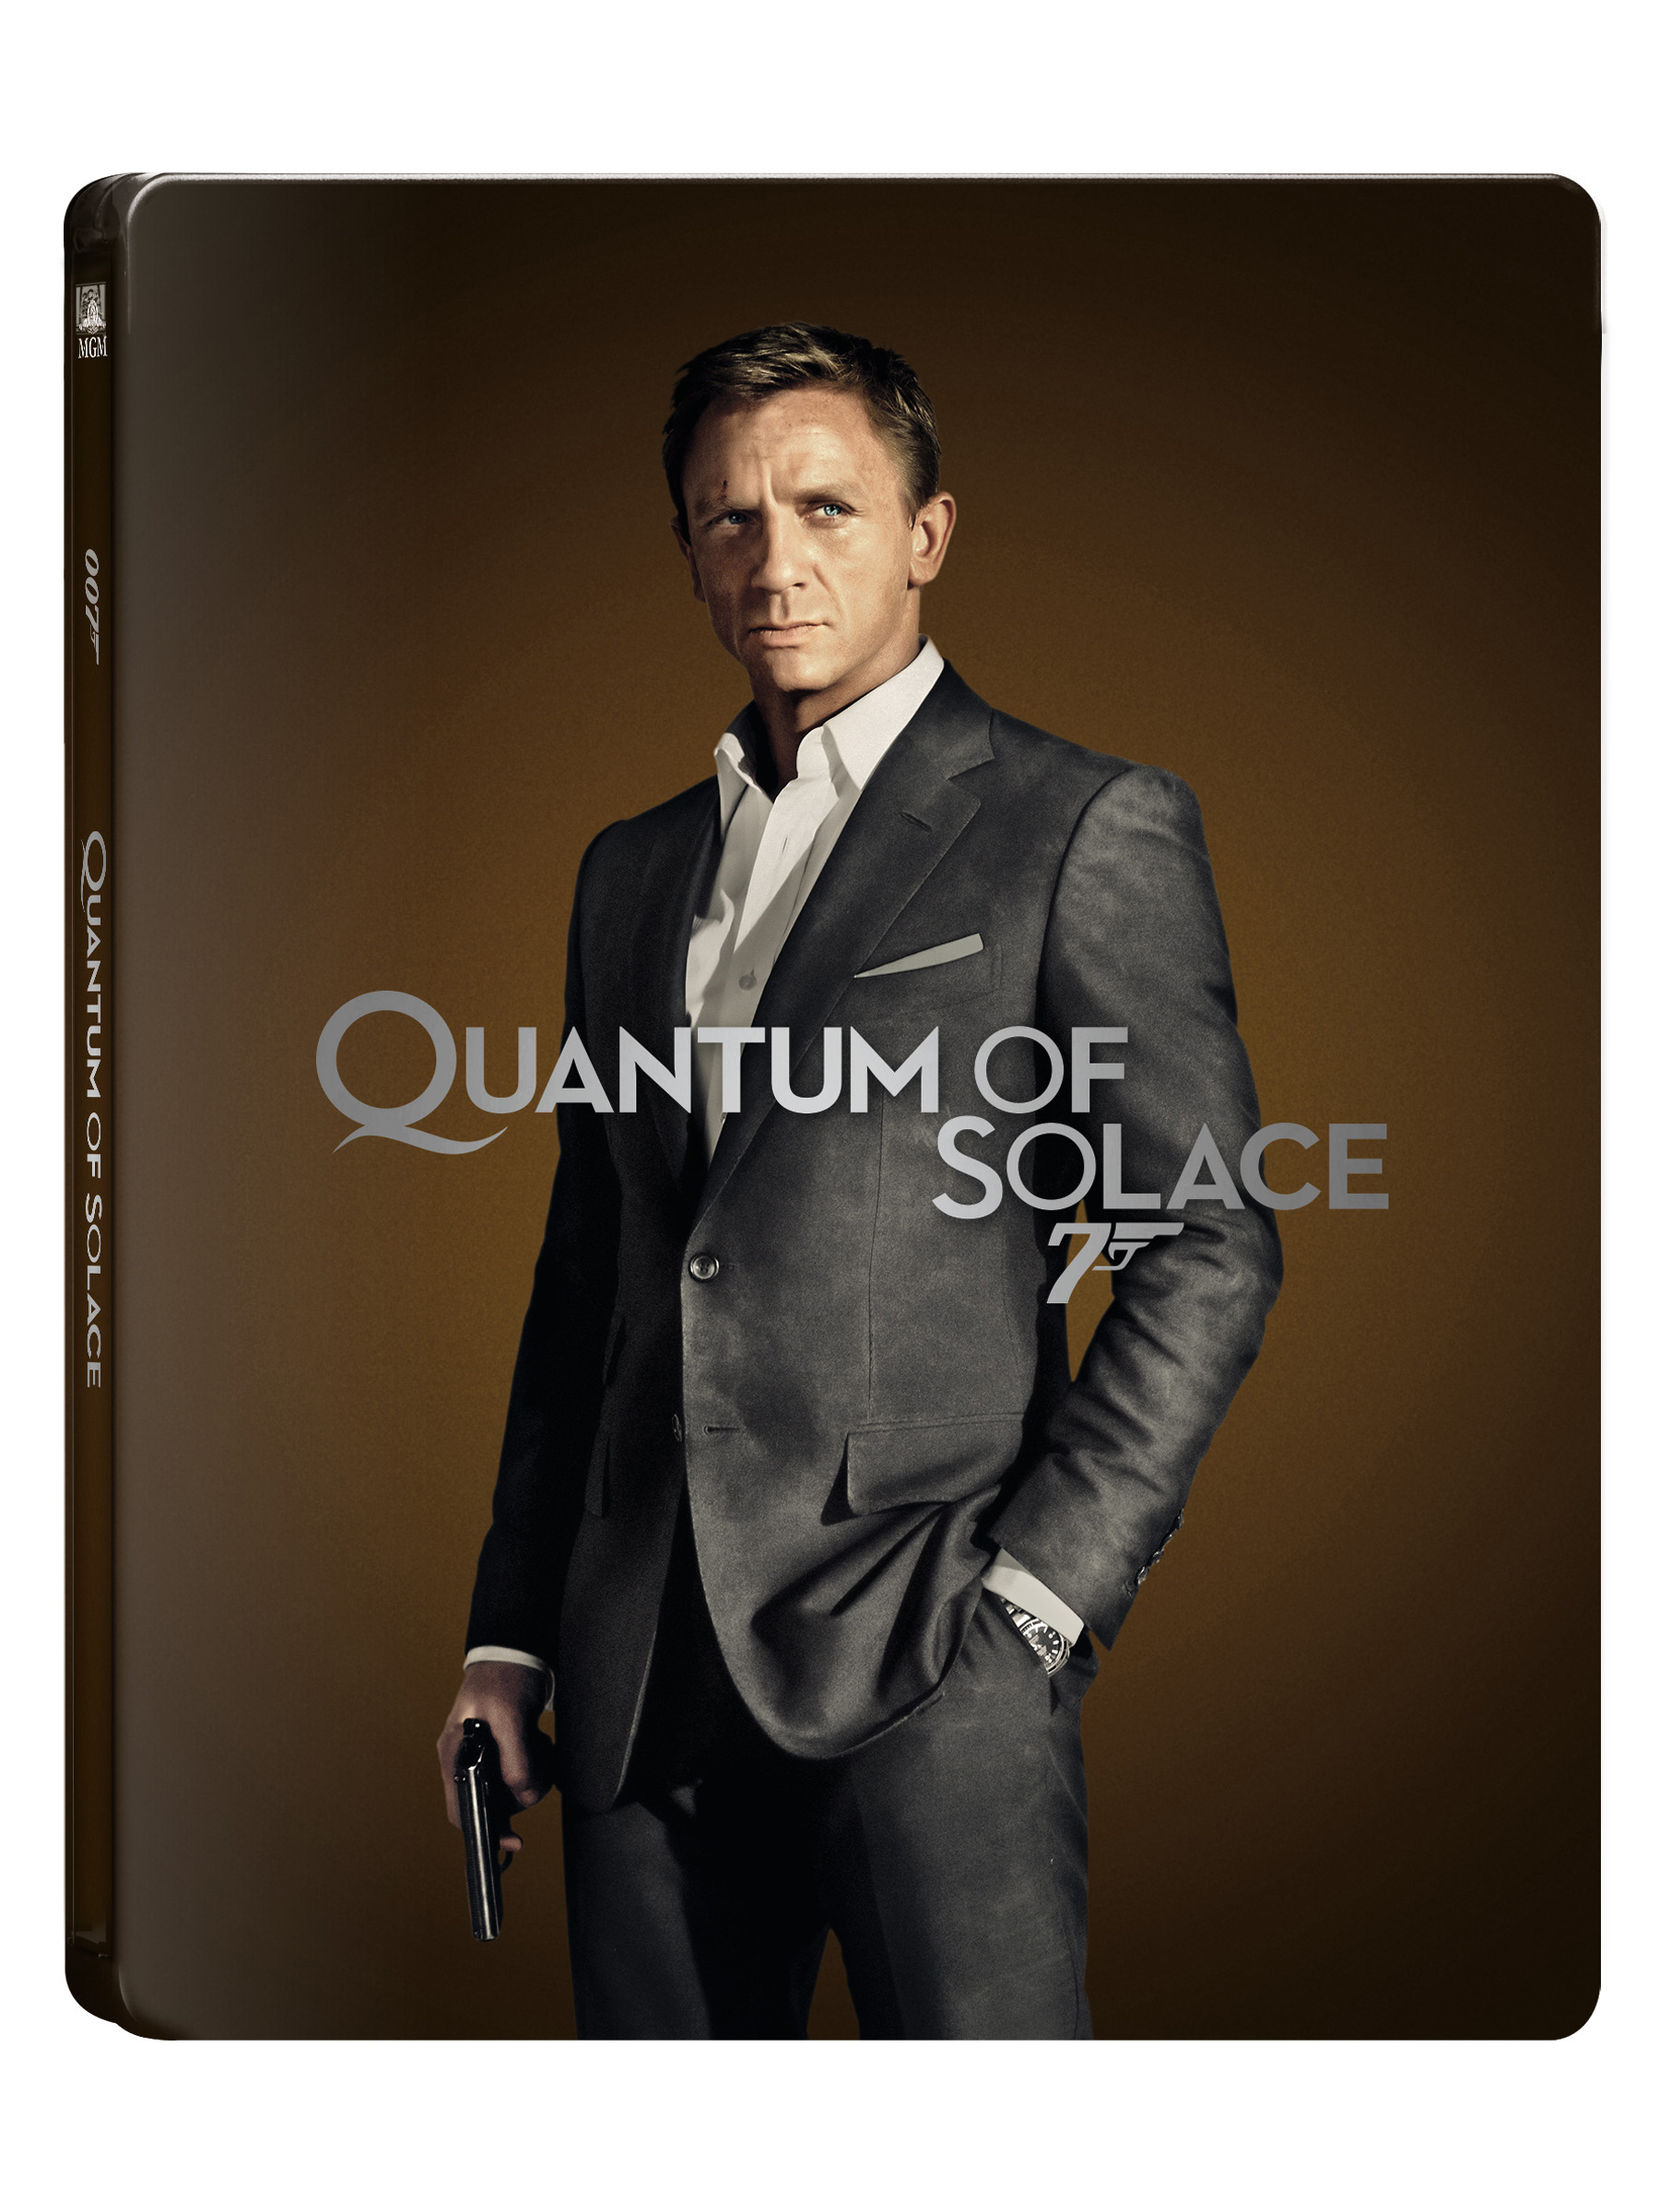 [Blu-ray] 007 퀀텀 오브 솔러스 4K(2Disc: 4K UHD+BD) 스틸북 한정판